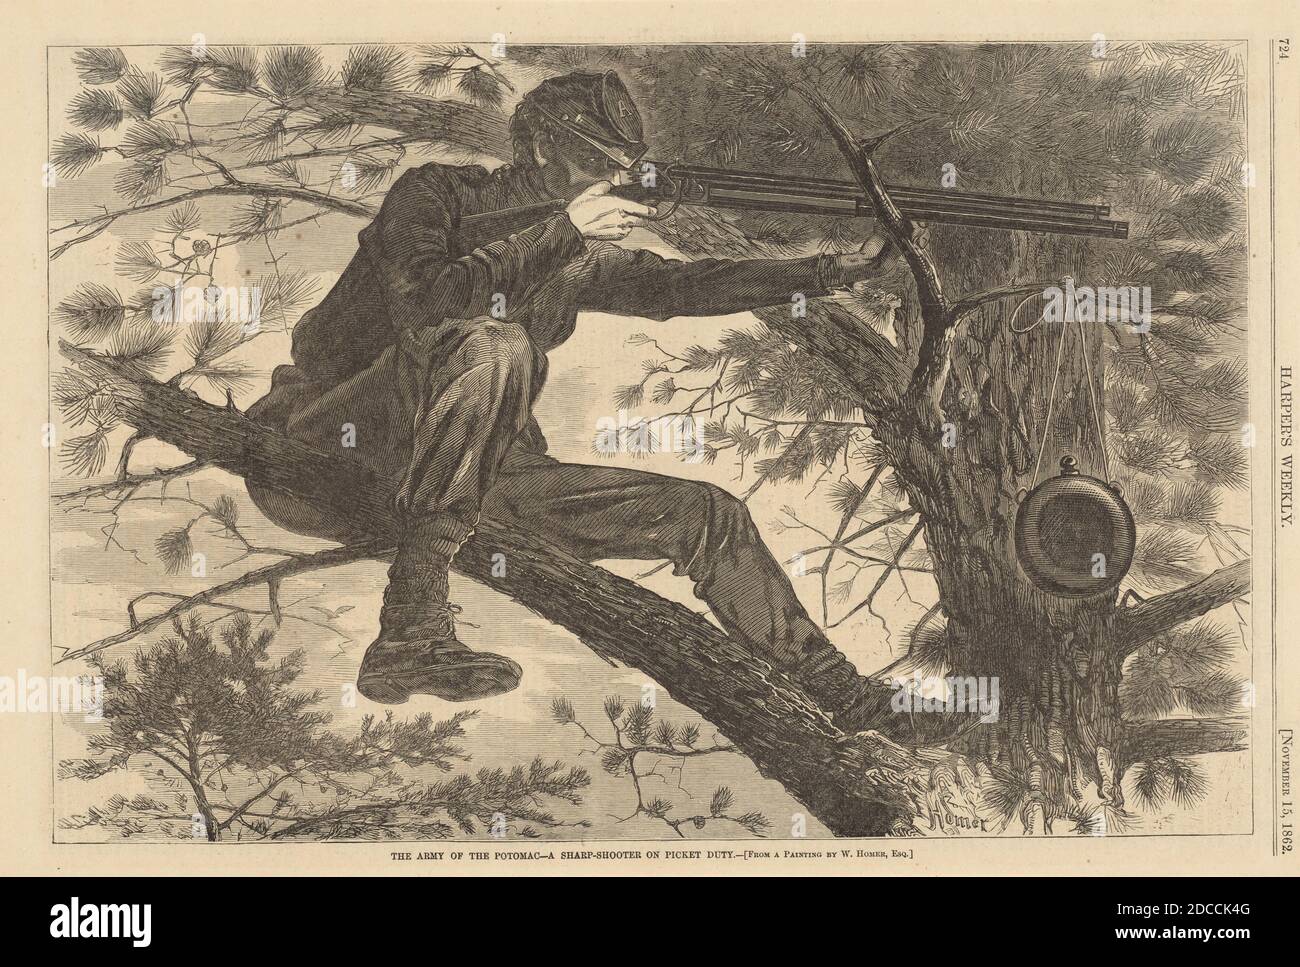 American 19th Century, (artista), Winslow Homer, (artista dopo), American, 1836 - 1910, The Army of the Potomac - A Sharp-Shooter on Picket Duty, from 'Harper's Weekly', November 15, 1862, p.724, (serie), 1862, incisione su carta da giornale, immagine: 23.2 x 35 cm (9 1/8 x 13 3/4 in.), foglio: 28.7 x 41.9 cm (11 5/16 x 16 1/2 pollici Foto Stock